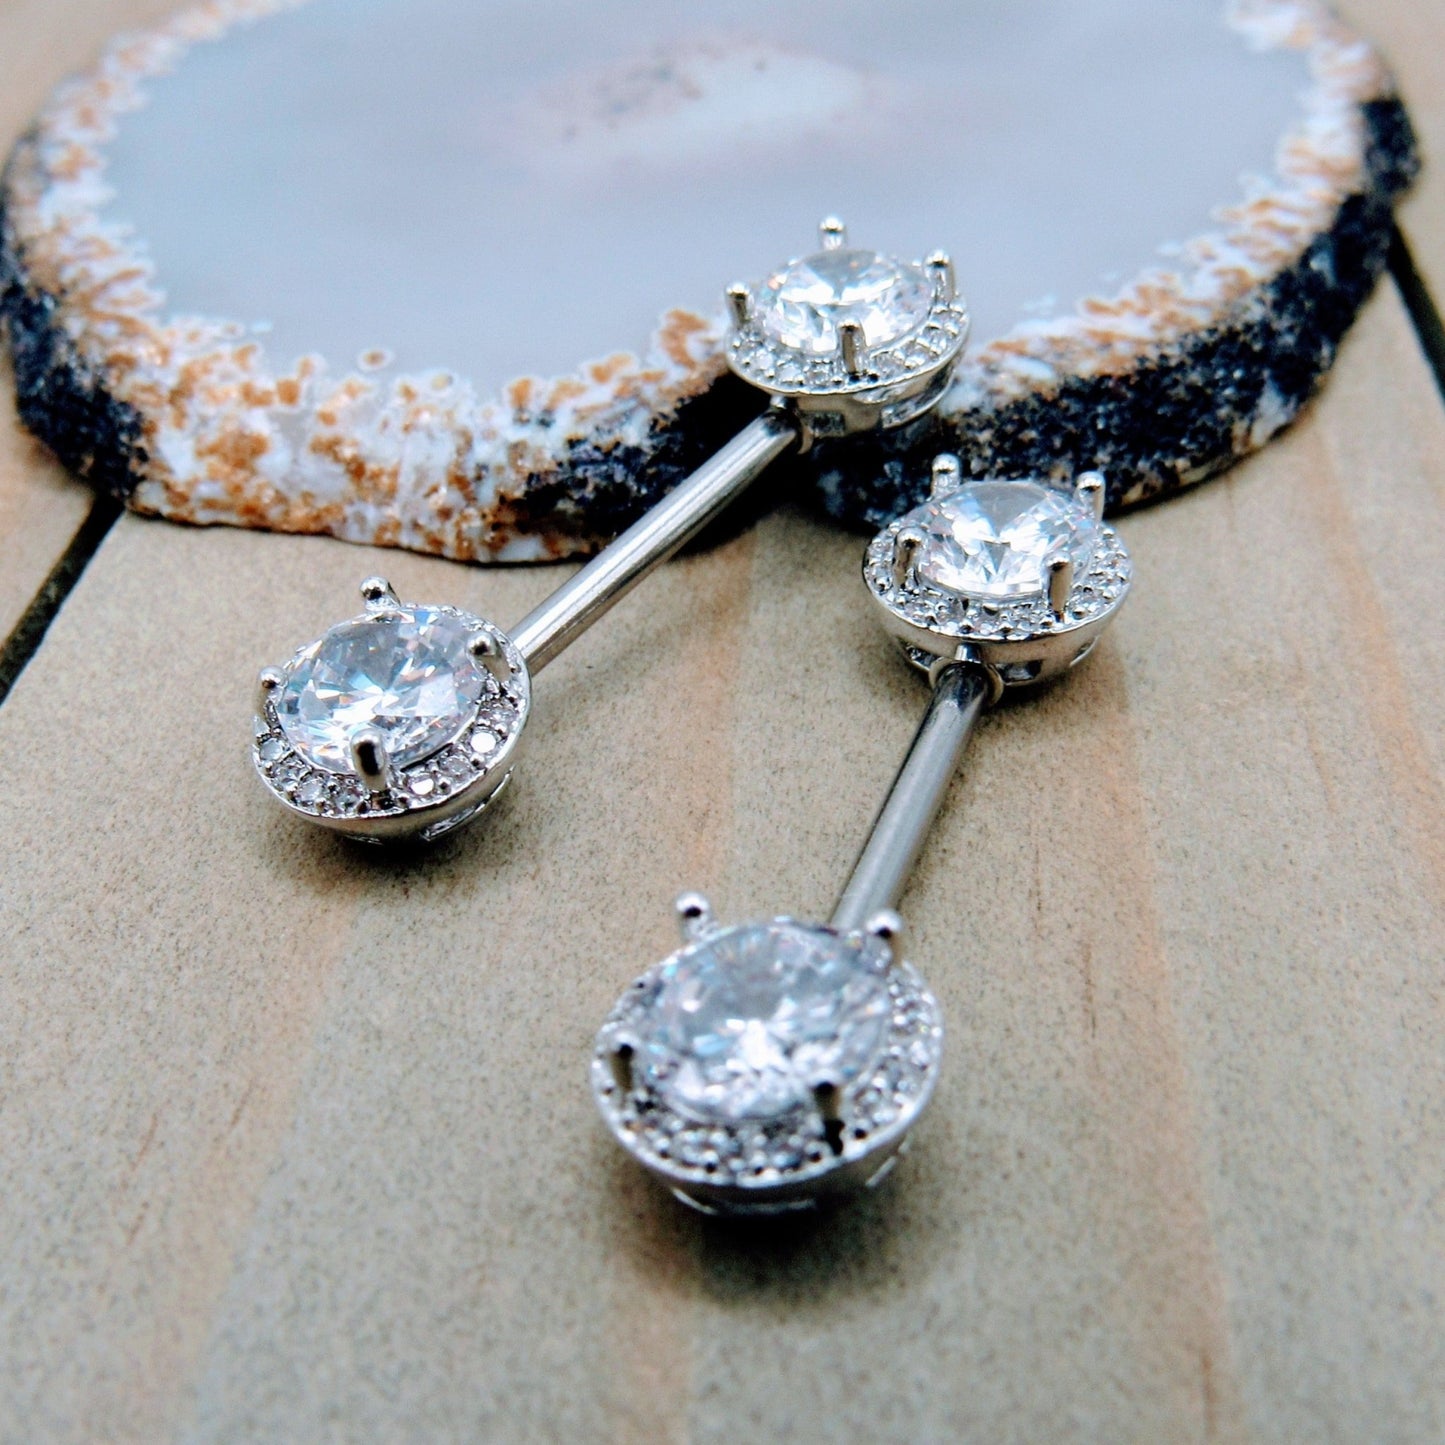 14g Round CZ gemstone paved gems nipple piercing barbell set 9/16" length pair silver surgical steel - Siren Body Jewelry